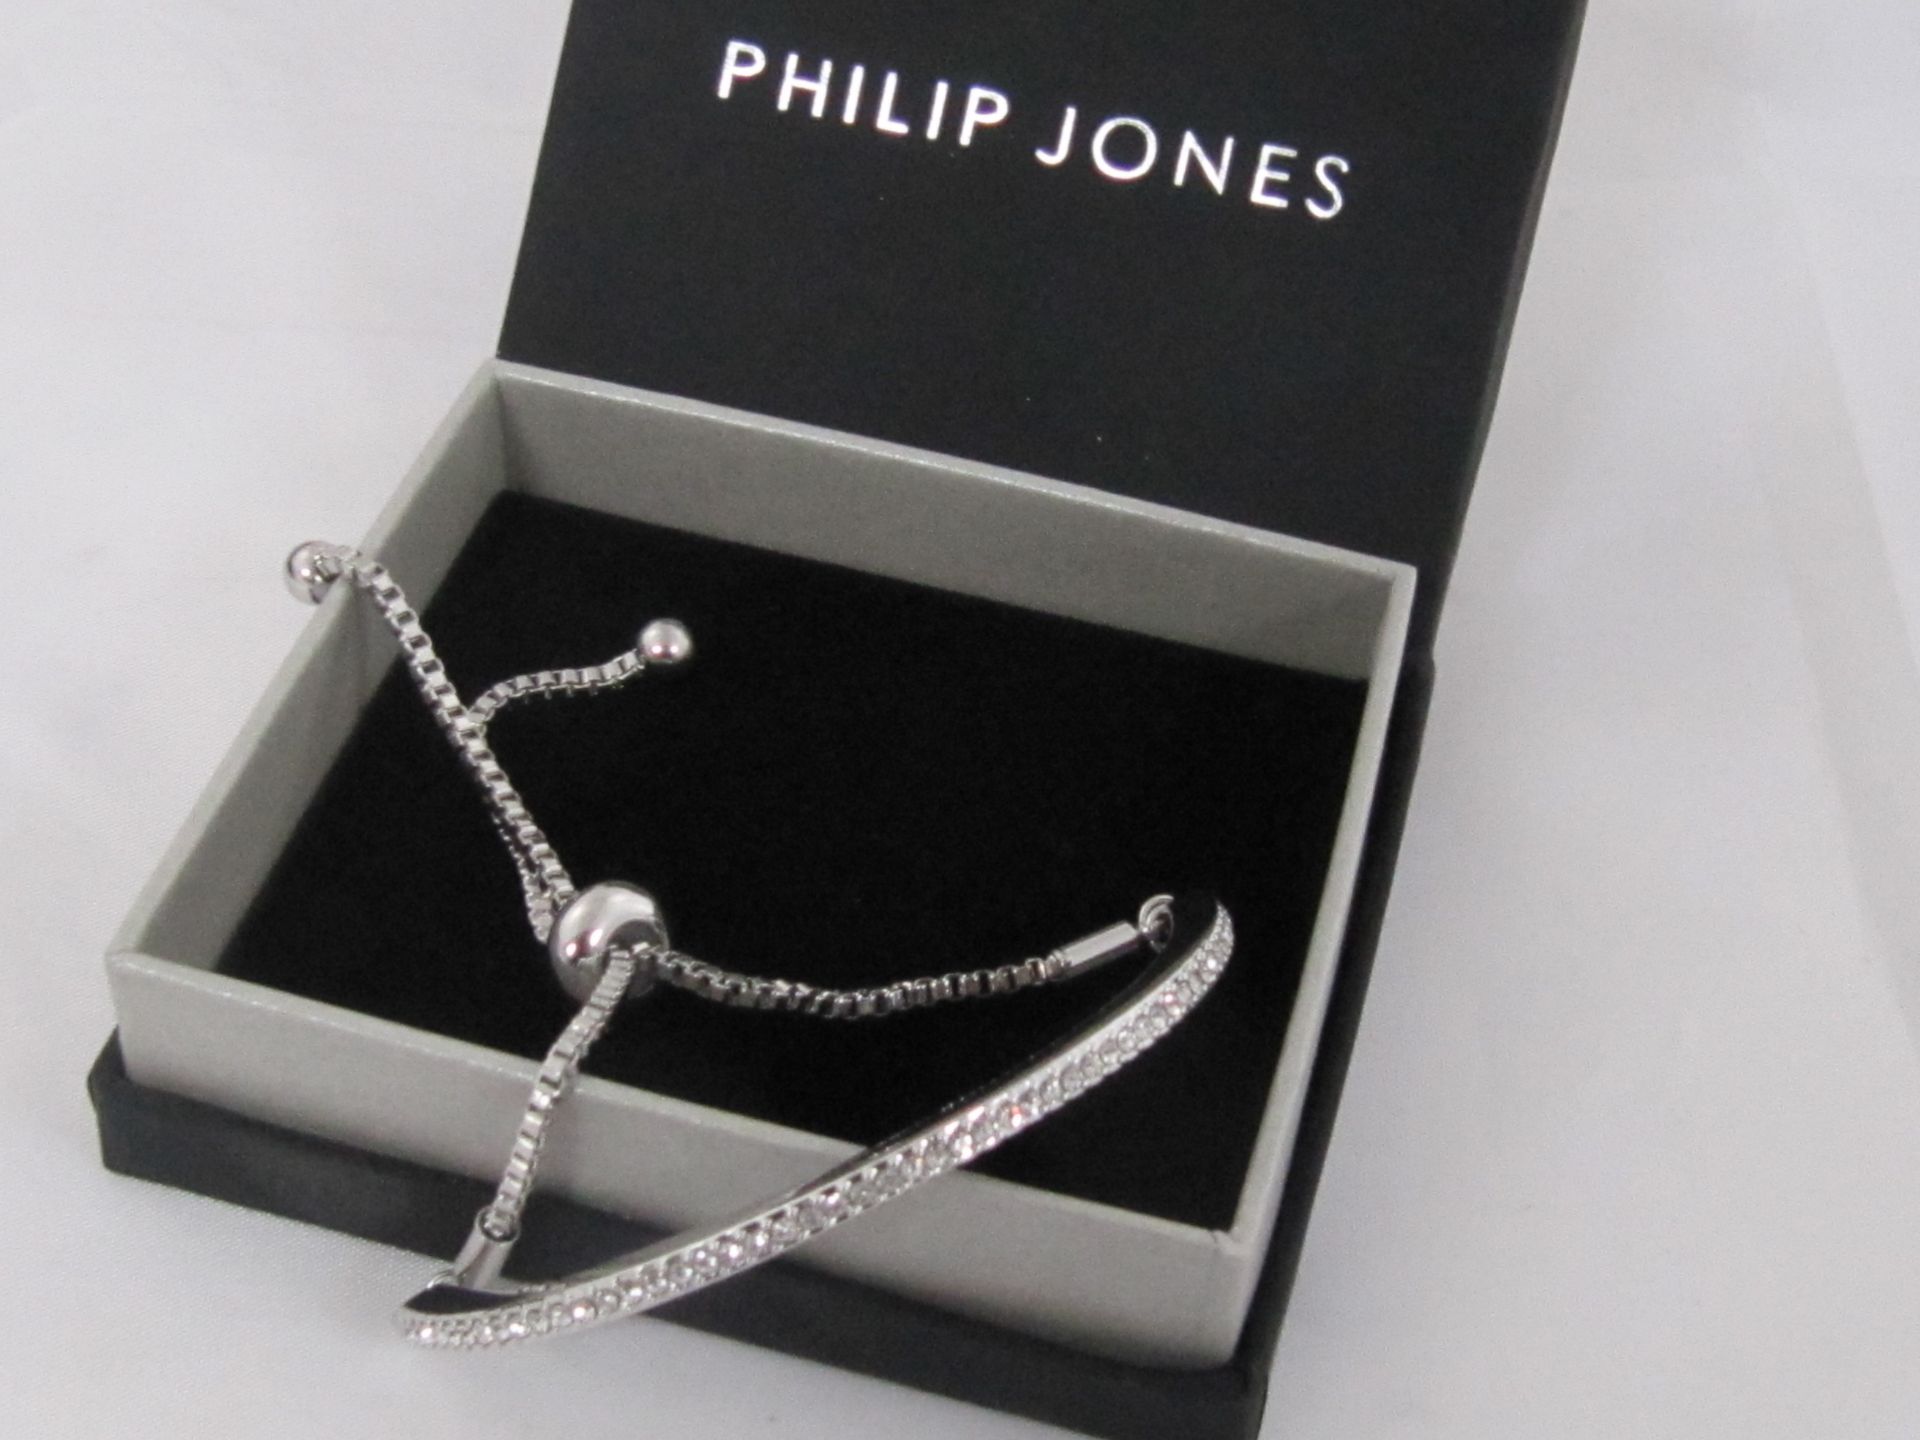 Philip Jones Silver Bracelet with Swarovski Elements.